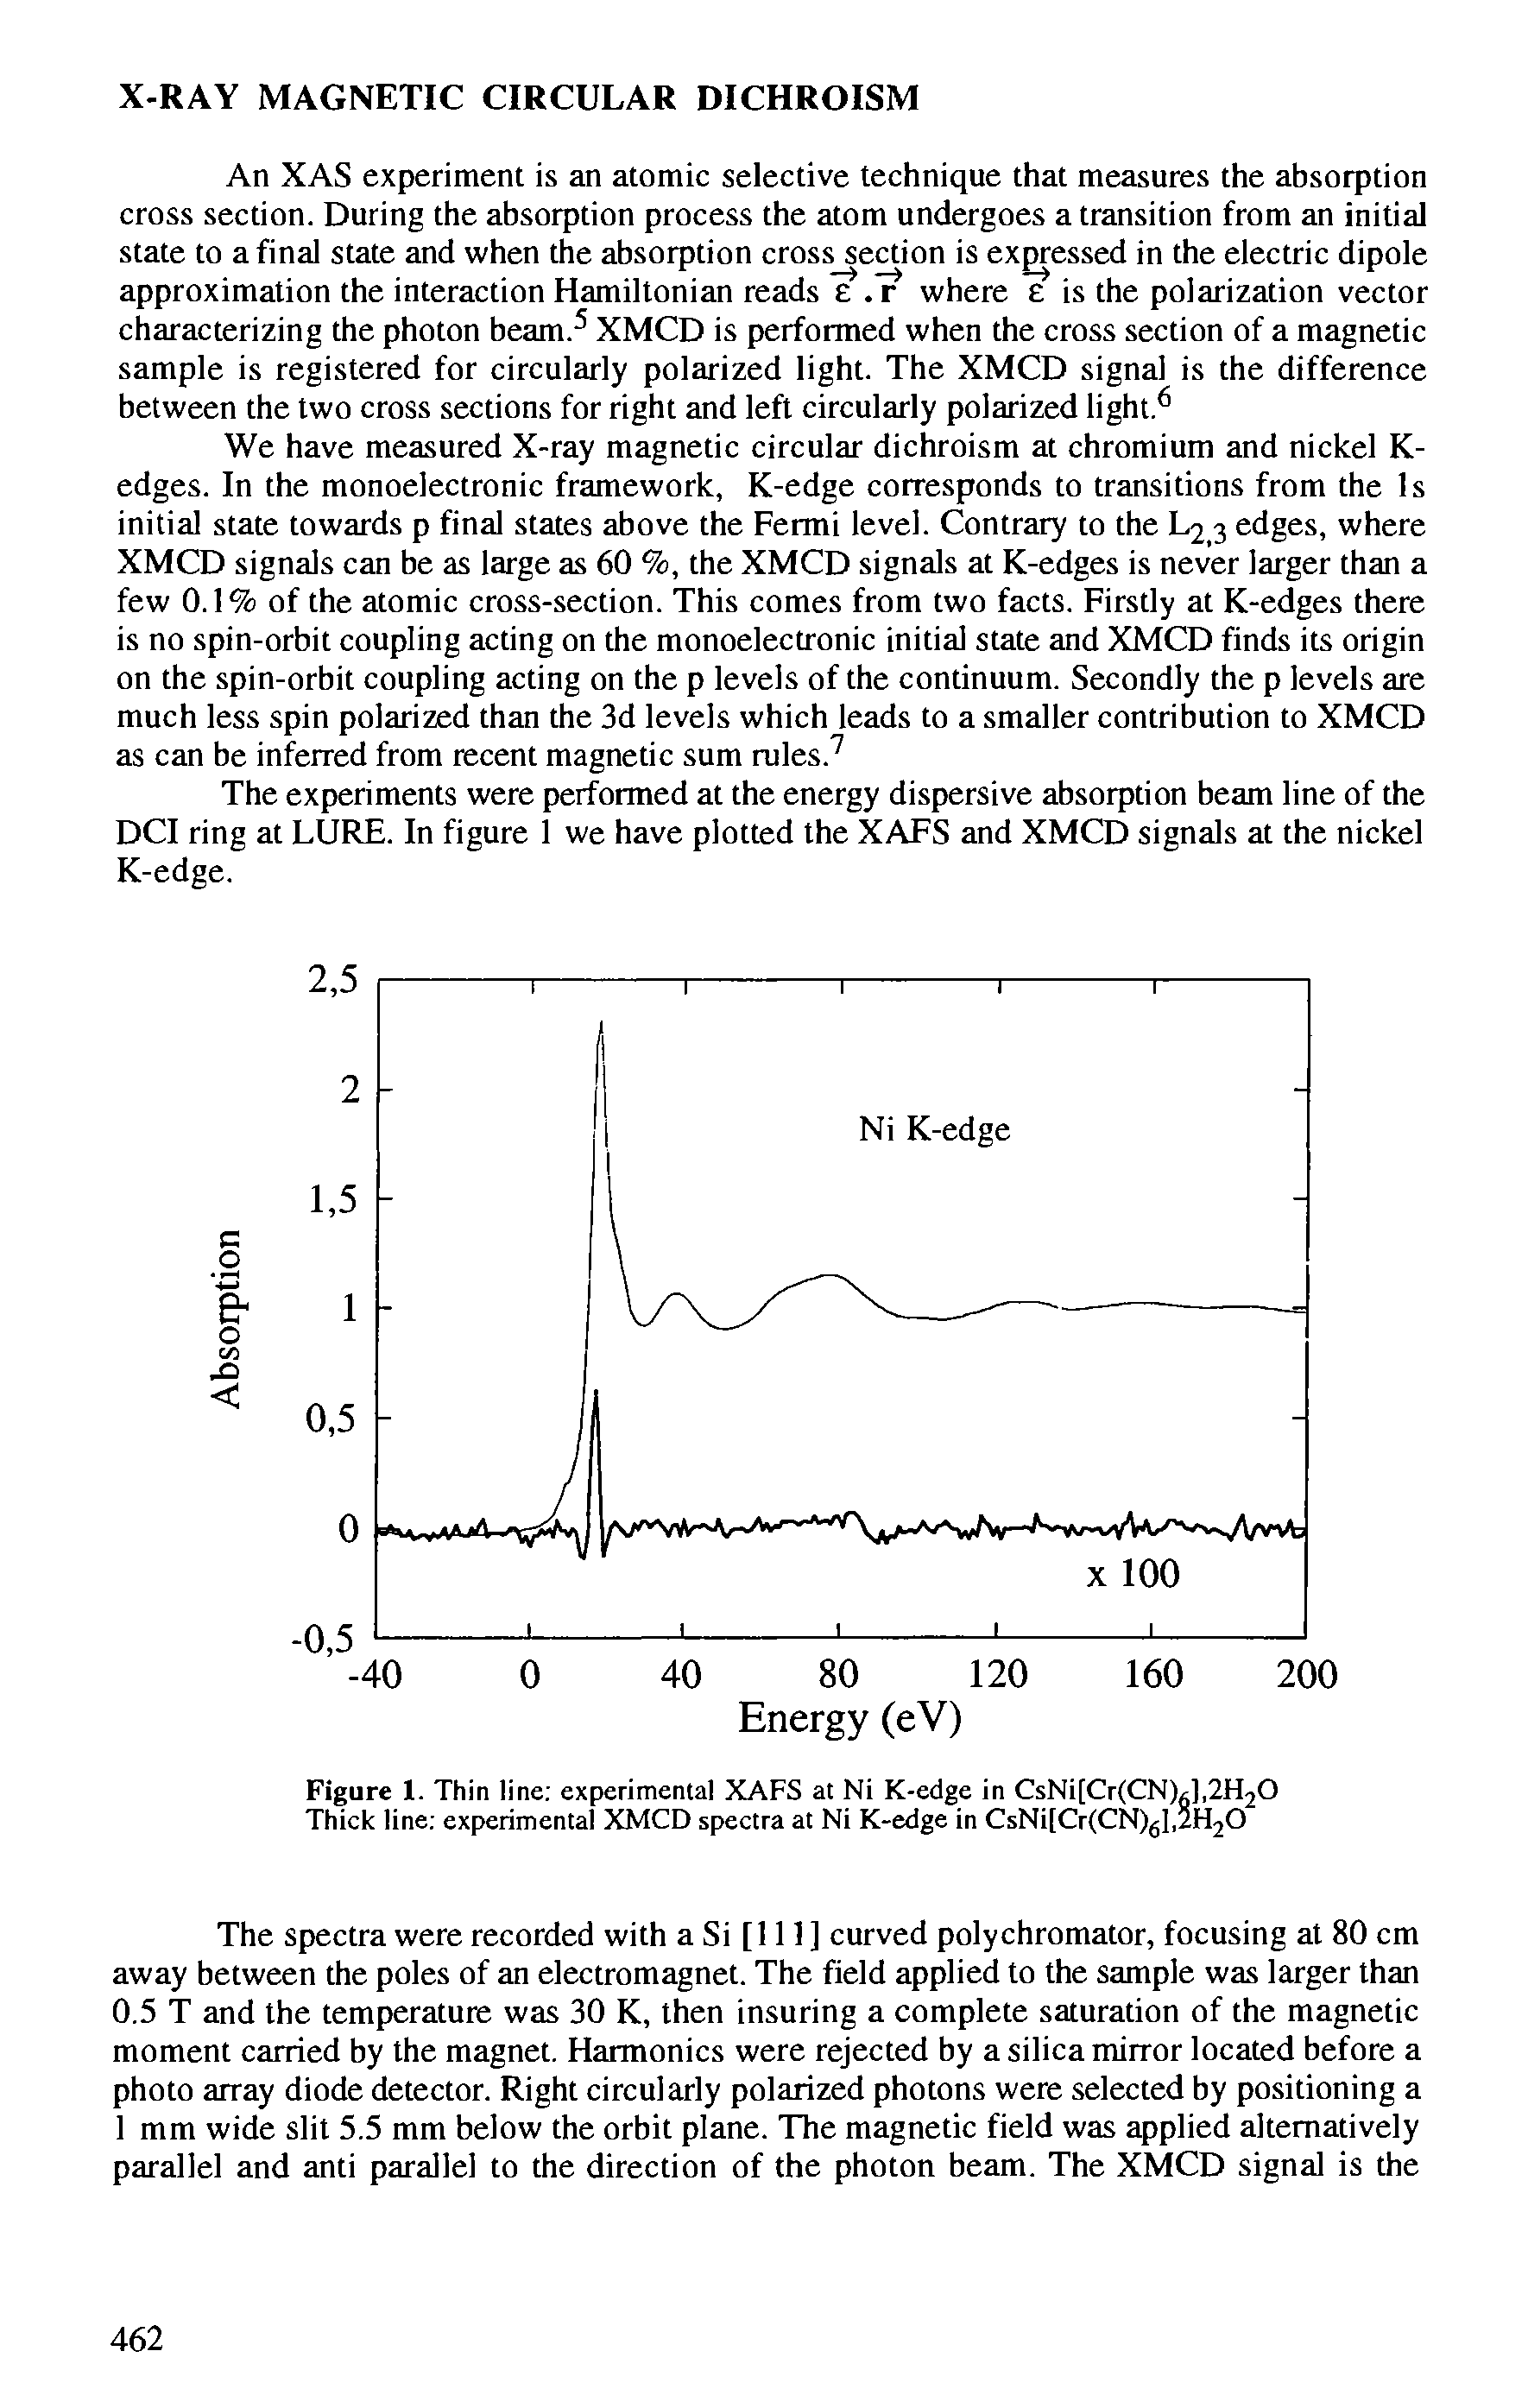 Figure 1. Thin line experimental XAFS at Ni K-edge in CsNi[Cr(CN)J,2H20 Thick line experimental XMCD spectra at Ni K-edge in CsNi[Cr(CN)gl,2H20...